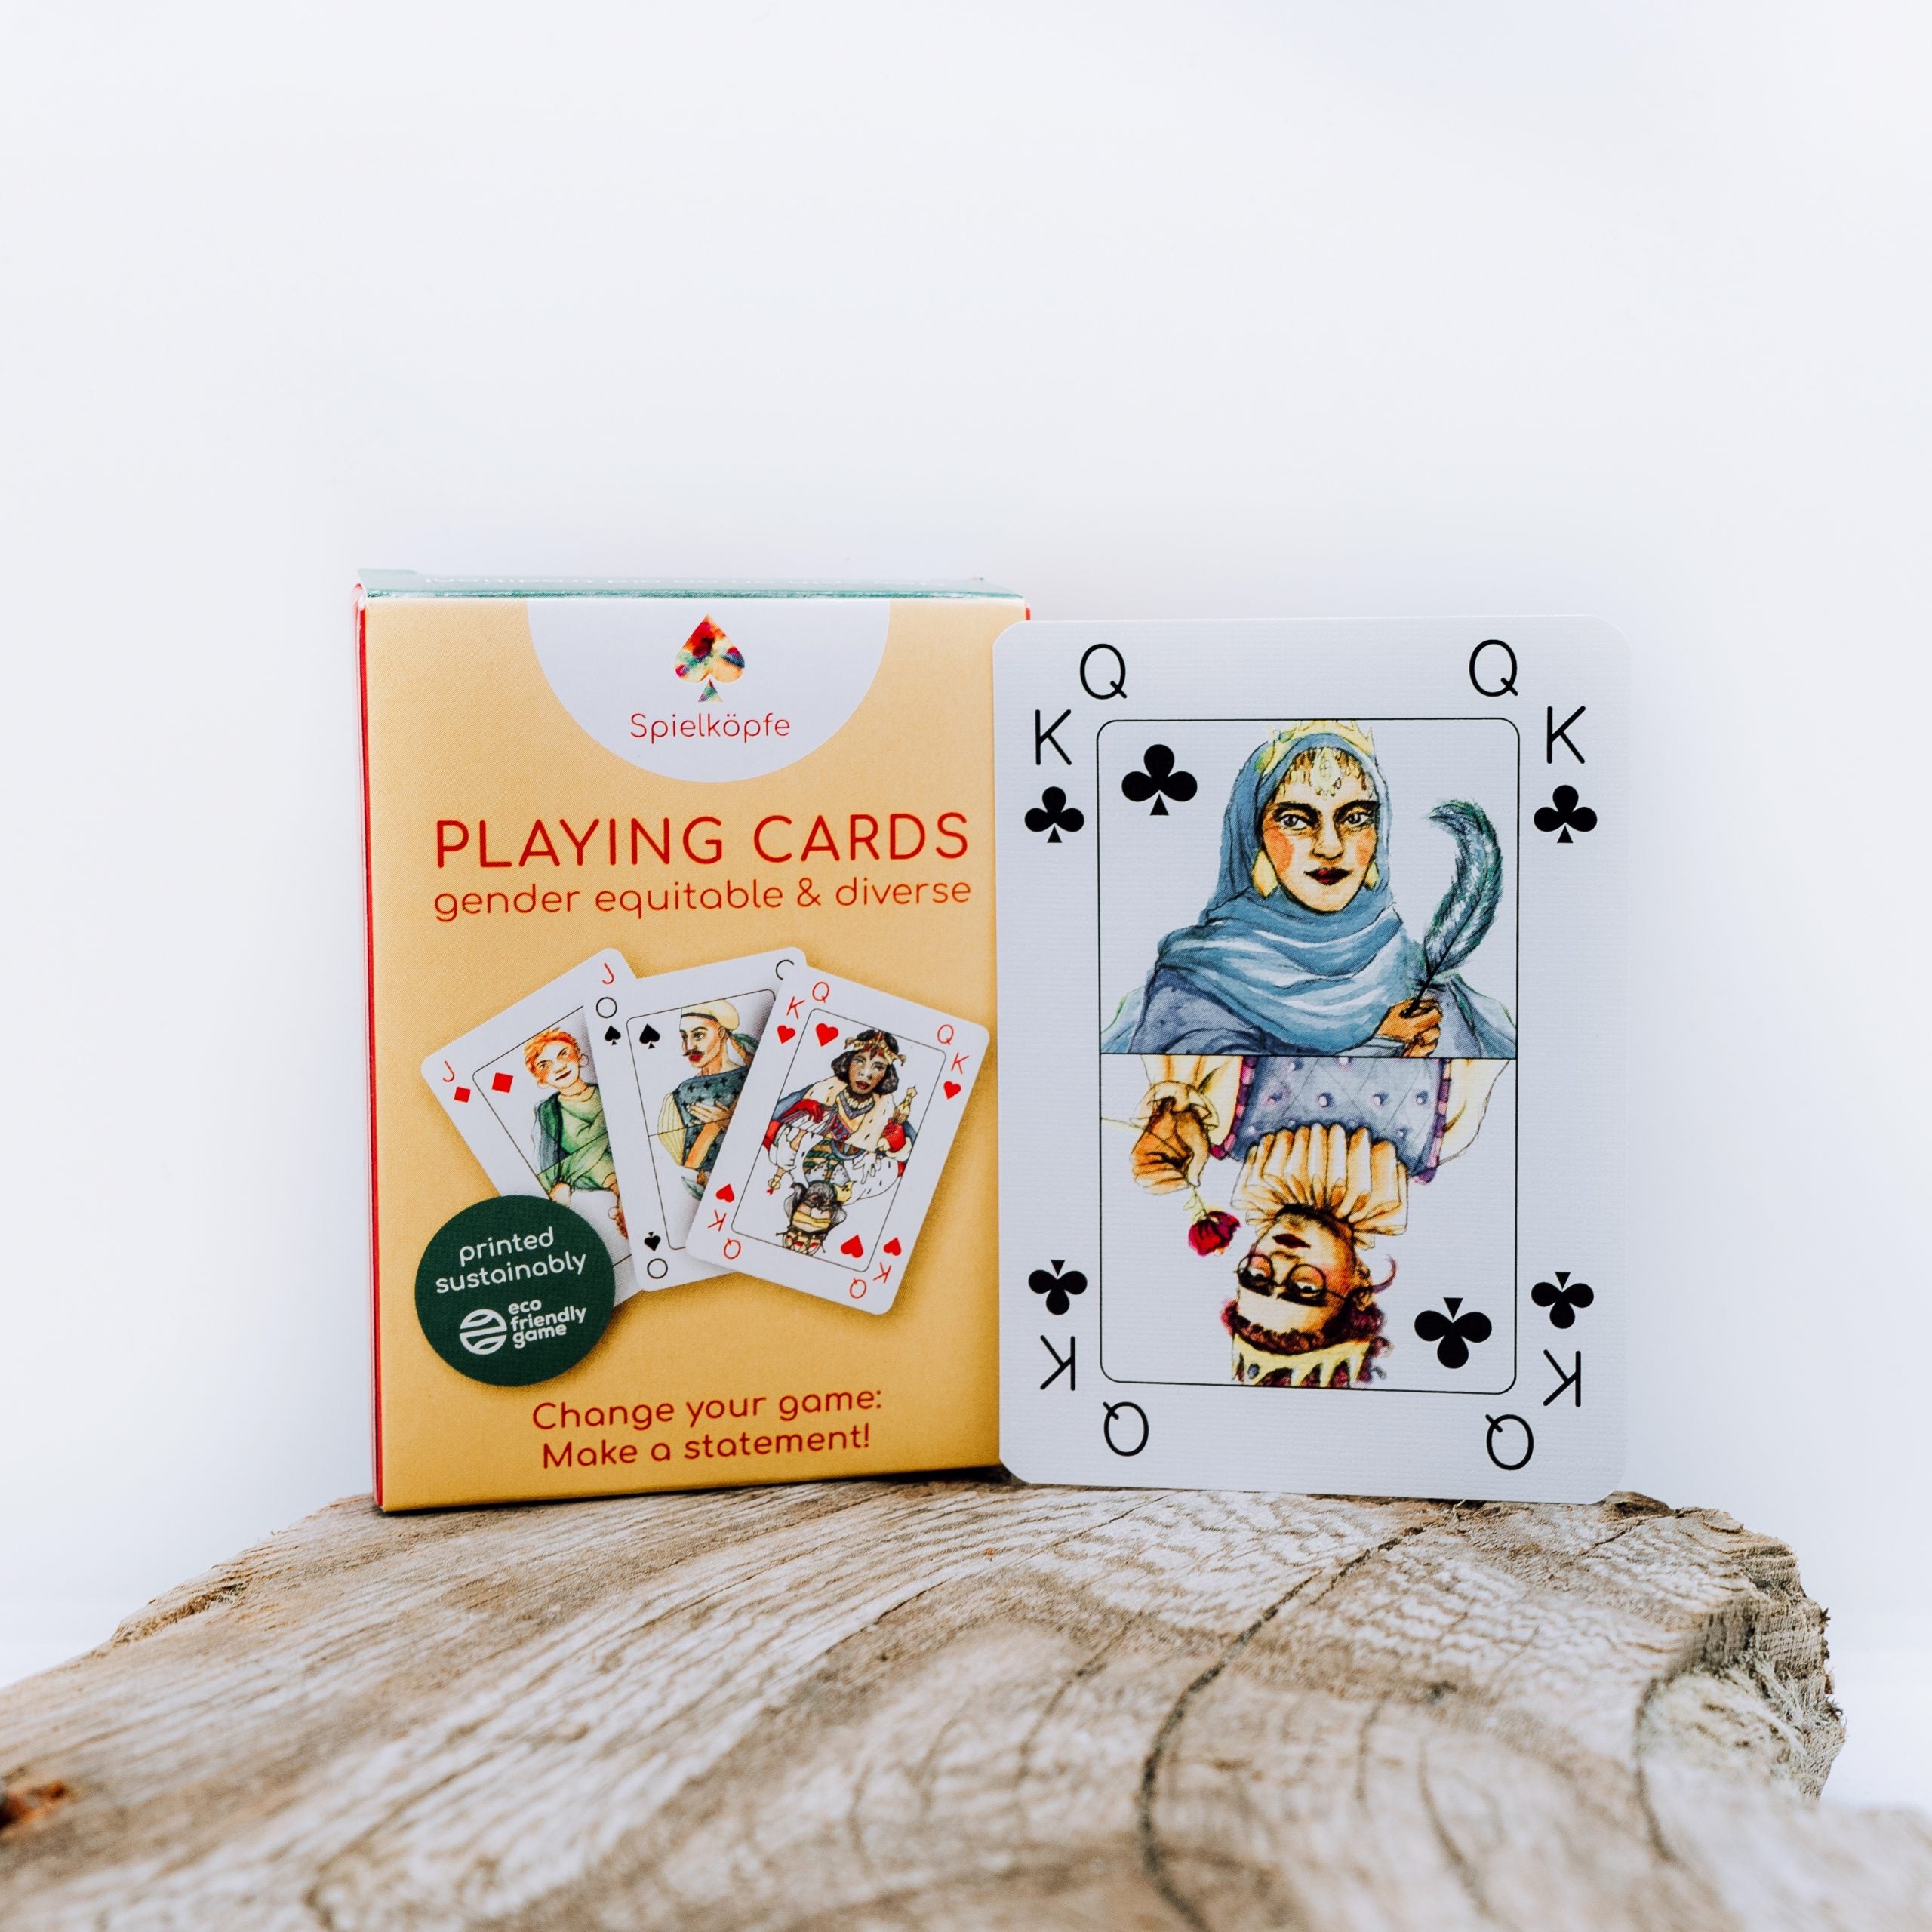 Spielköpfe "Playing Cards" - English Version